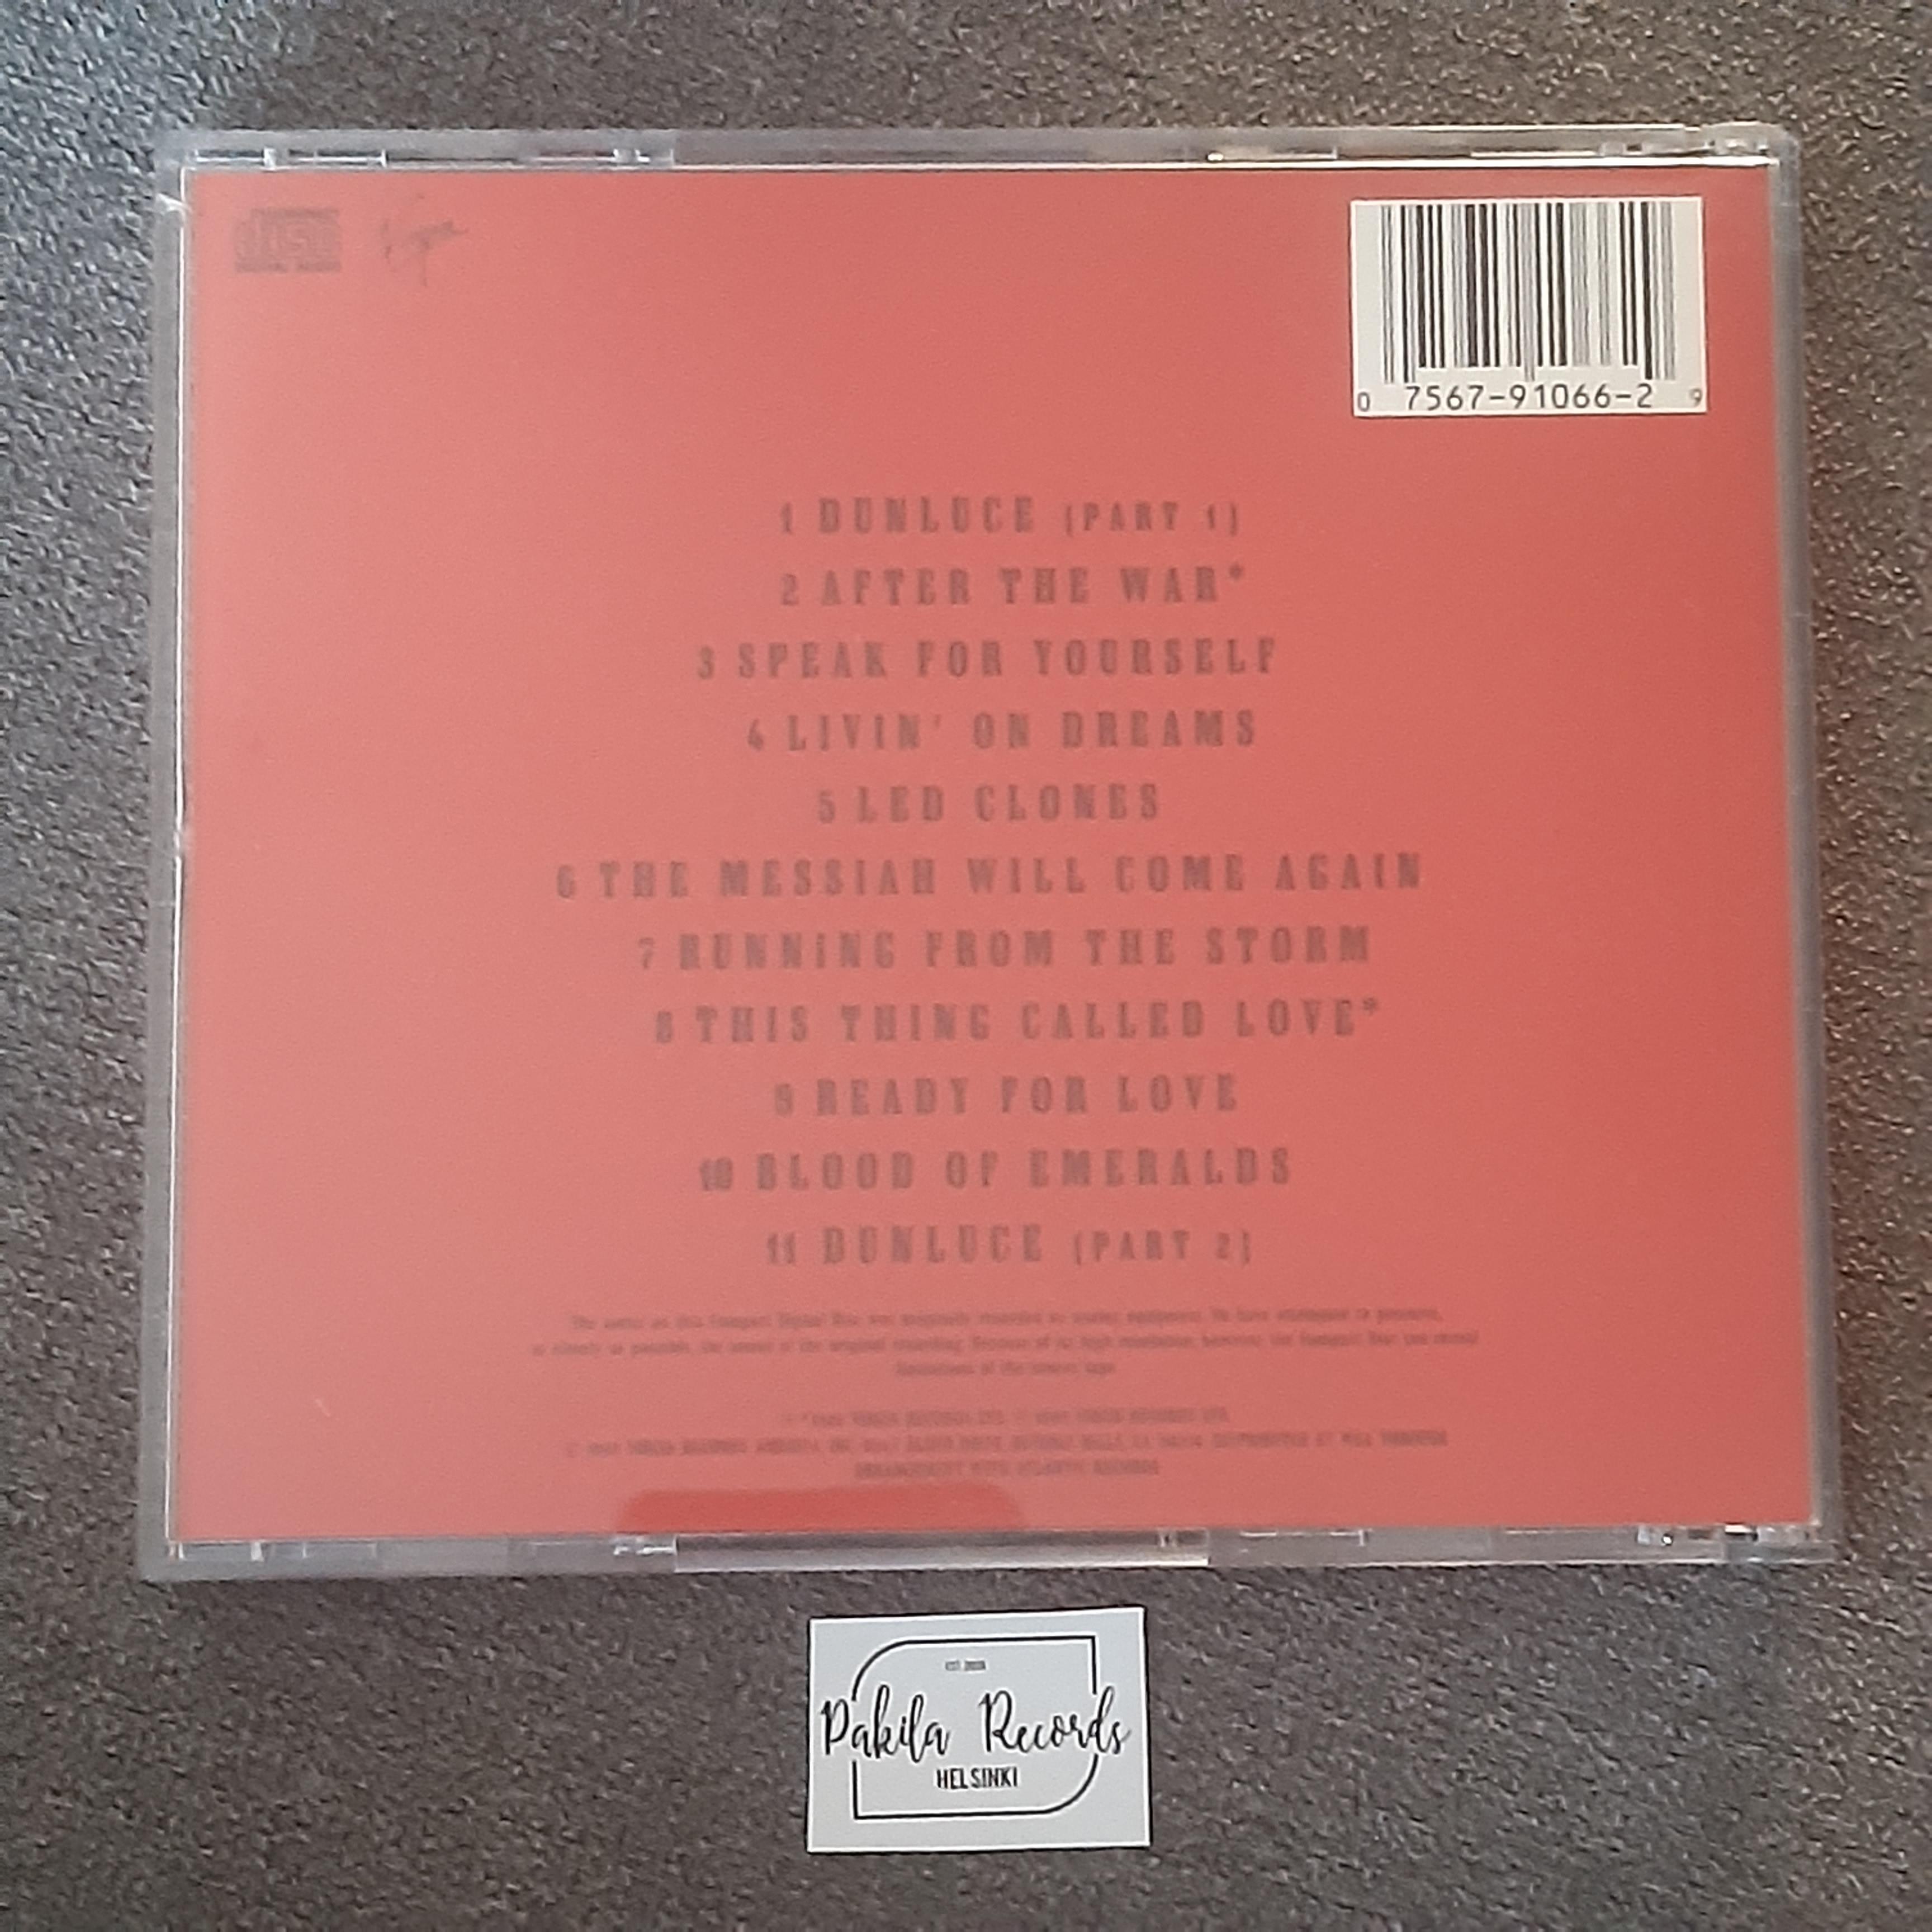 Gary Moore - After The War - CD (käytetty)